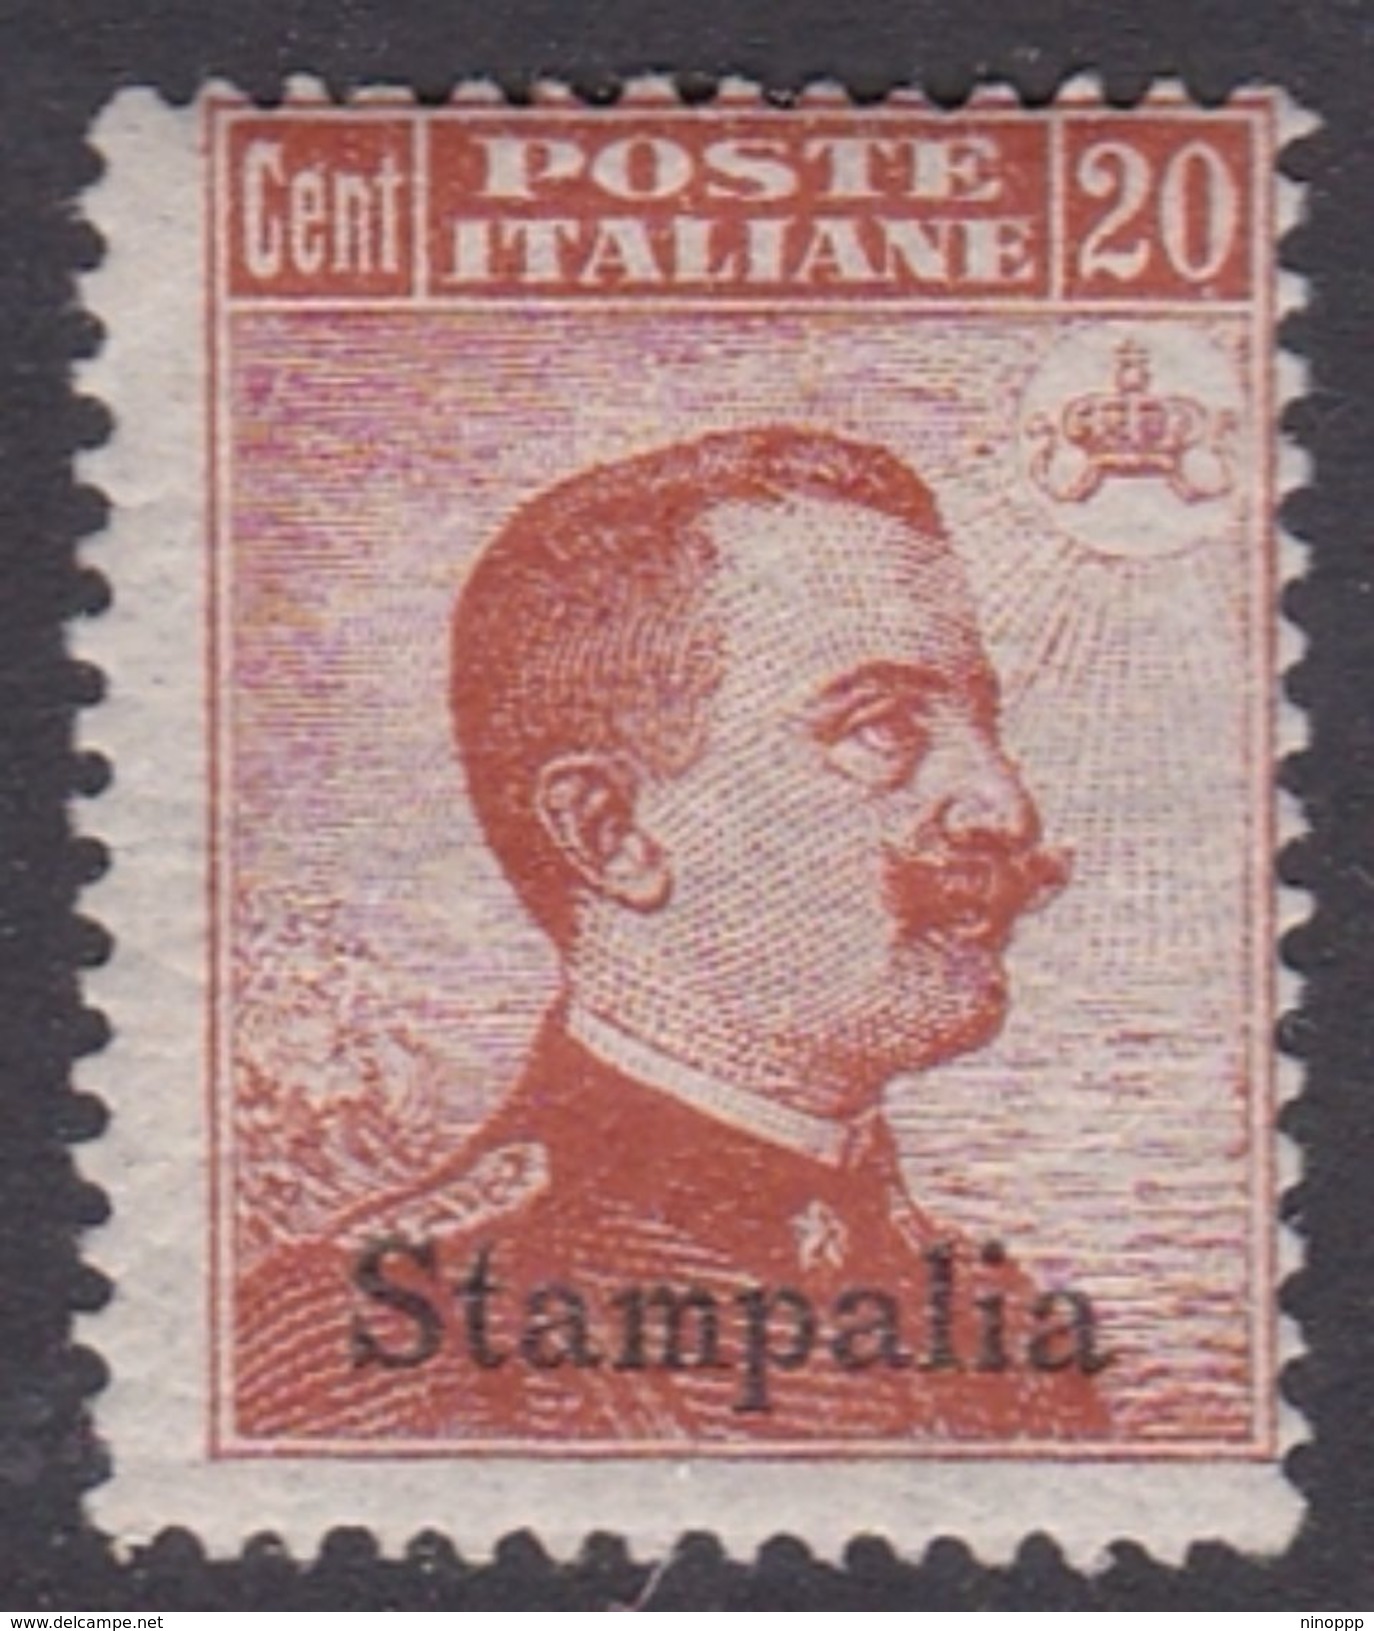 Italy-Colonies And Territories-Aegean-Stampalia S9 1917 20c Brown Orange No Watermark MH - Egeo (Stampalia)